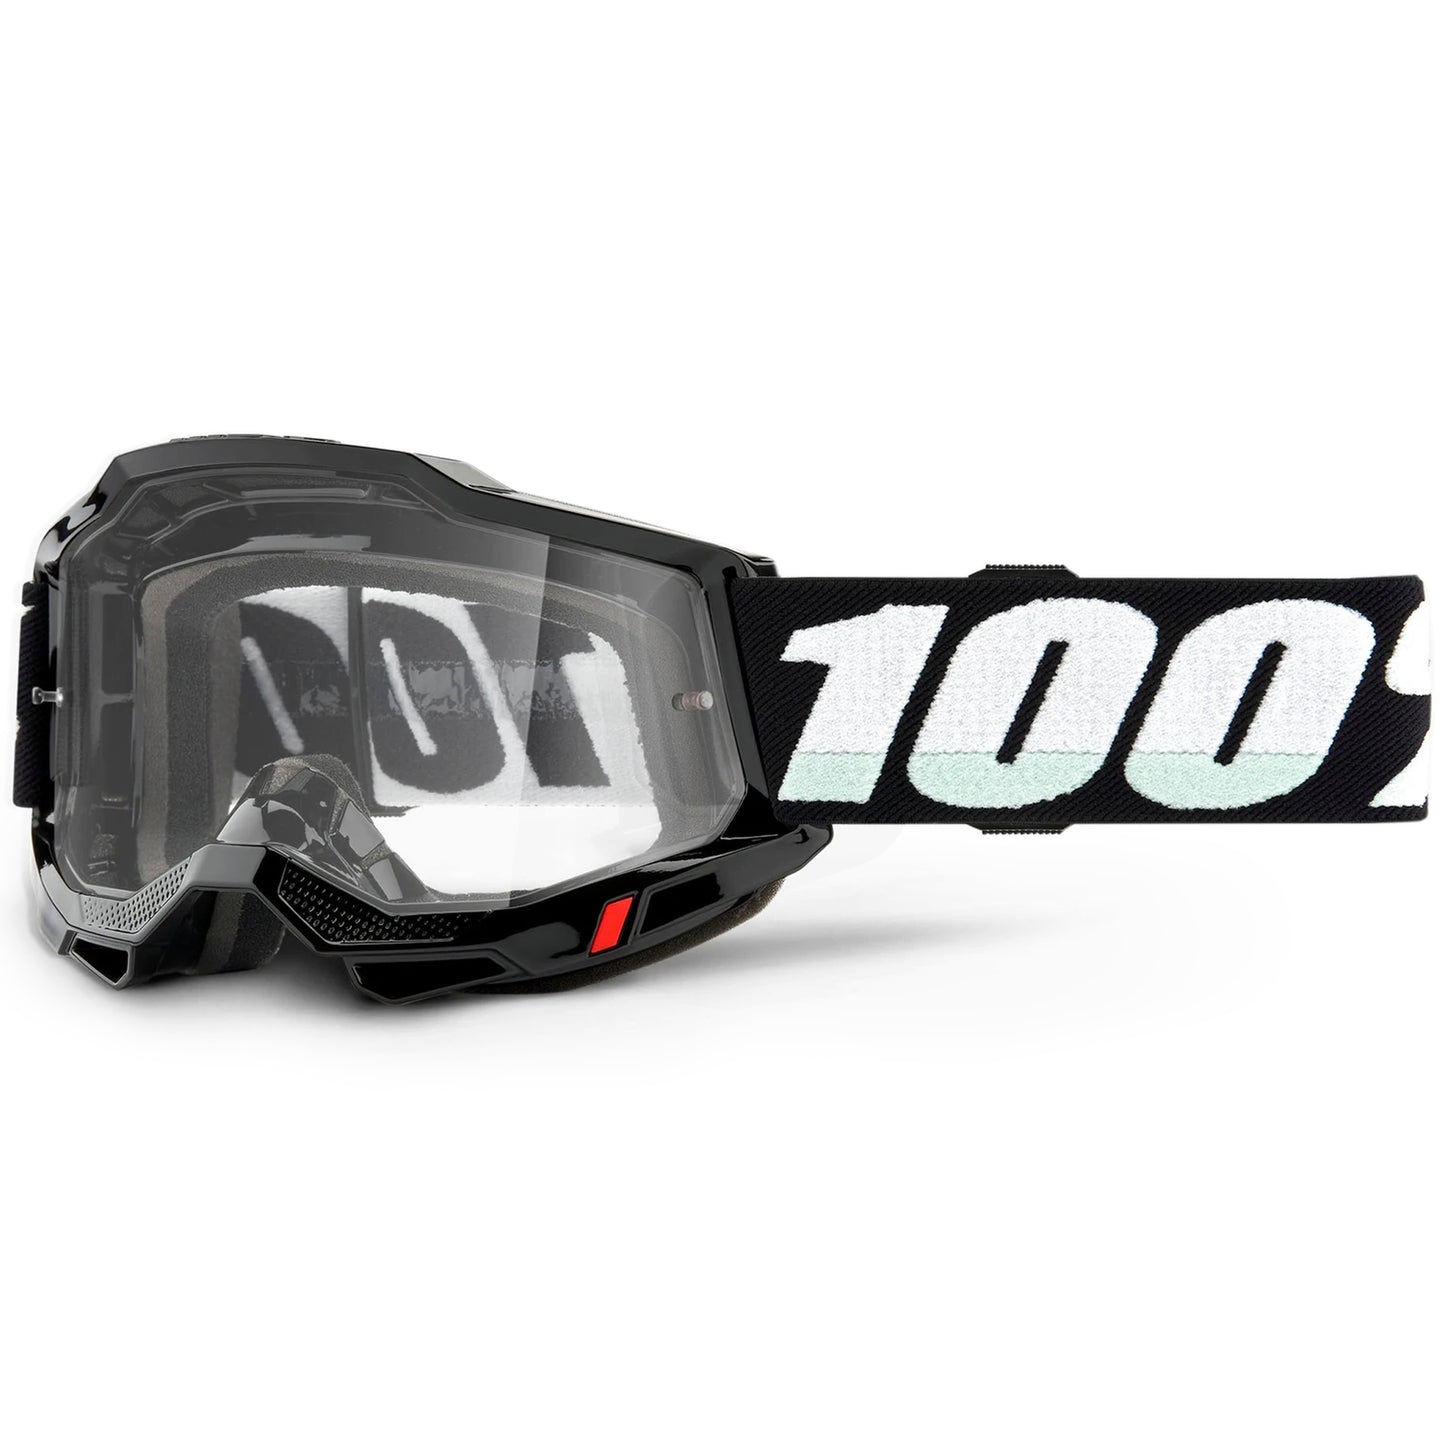 100% Accuri 2 Goggles - Black (Mirror Silver Lens)